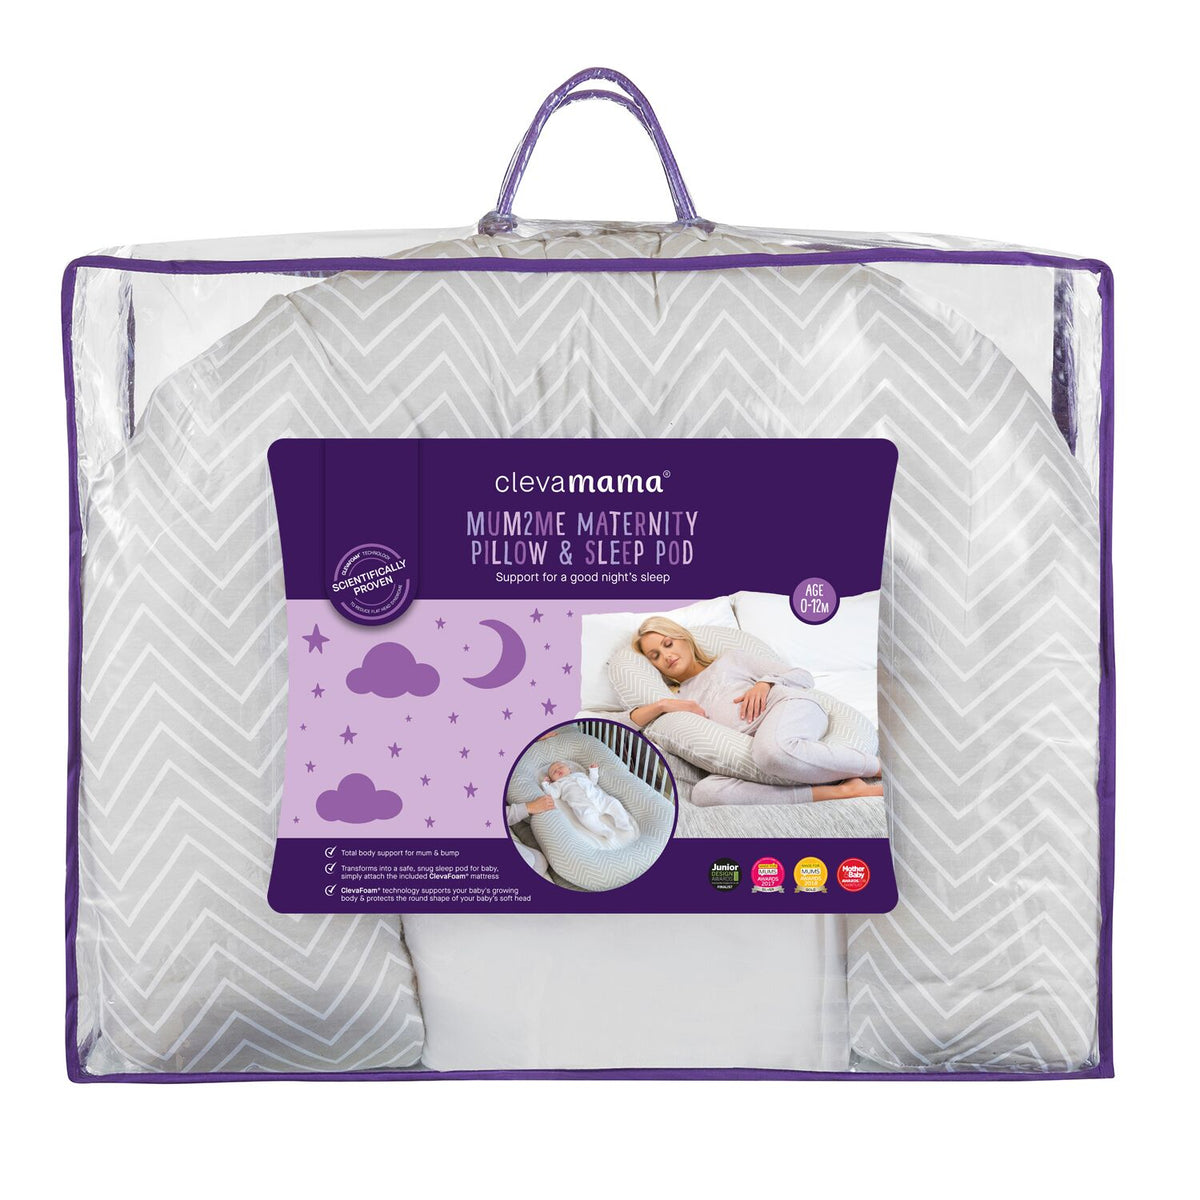 Clevamama Mum2Me Maternity Pillow & Sleep Pod - Happy Baby